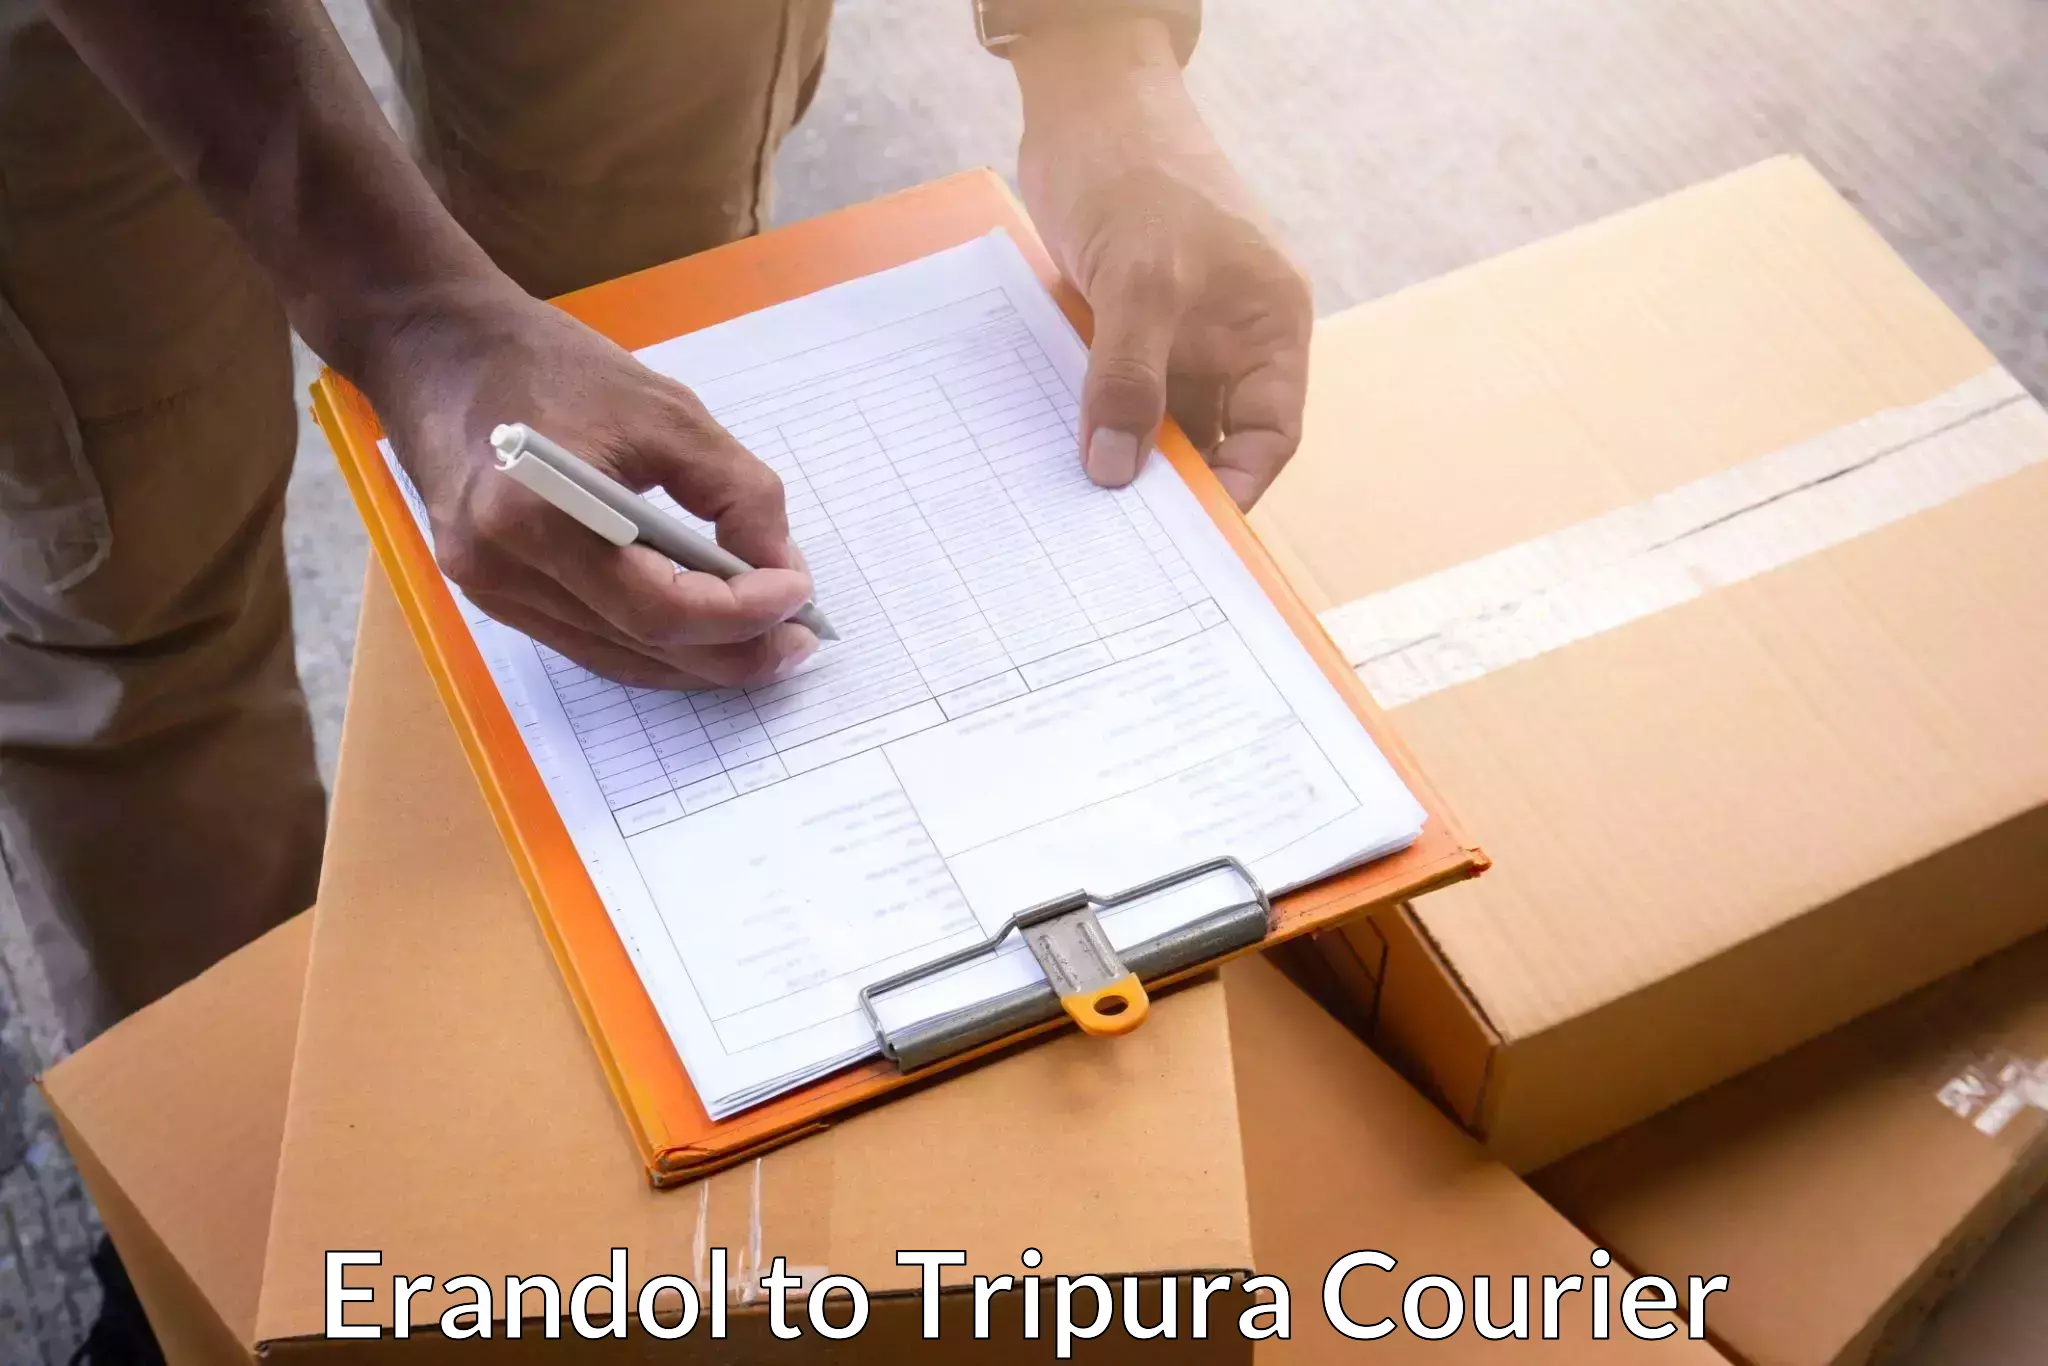 Multi-national courier services Erandol to Udaipur Tripura